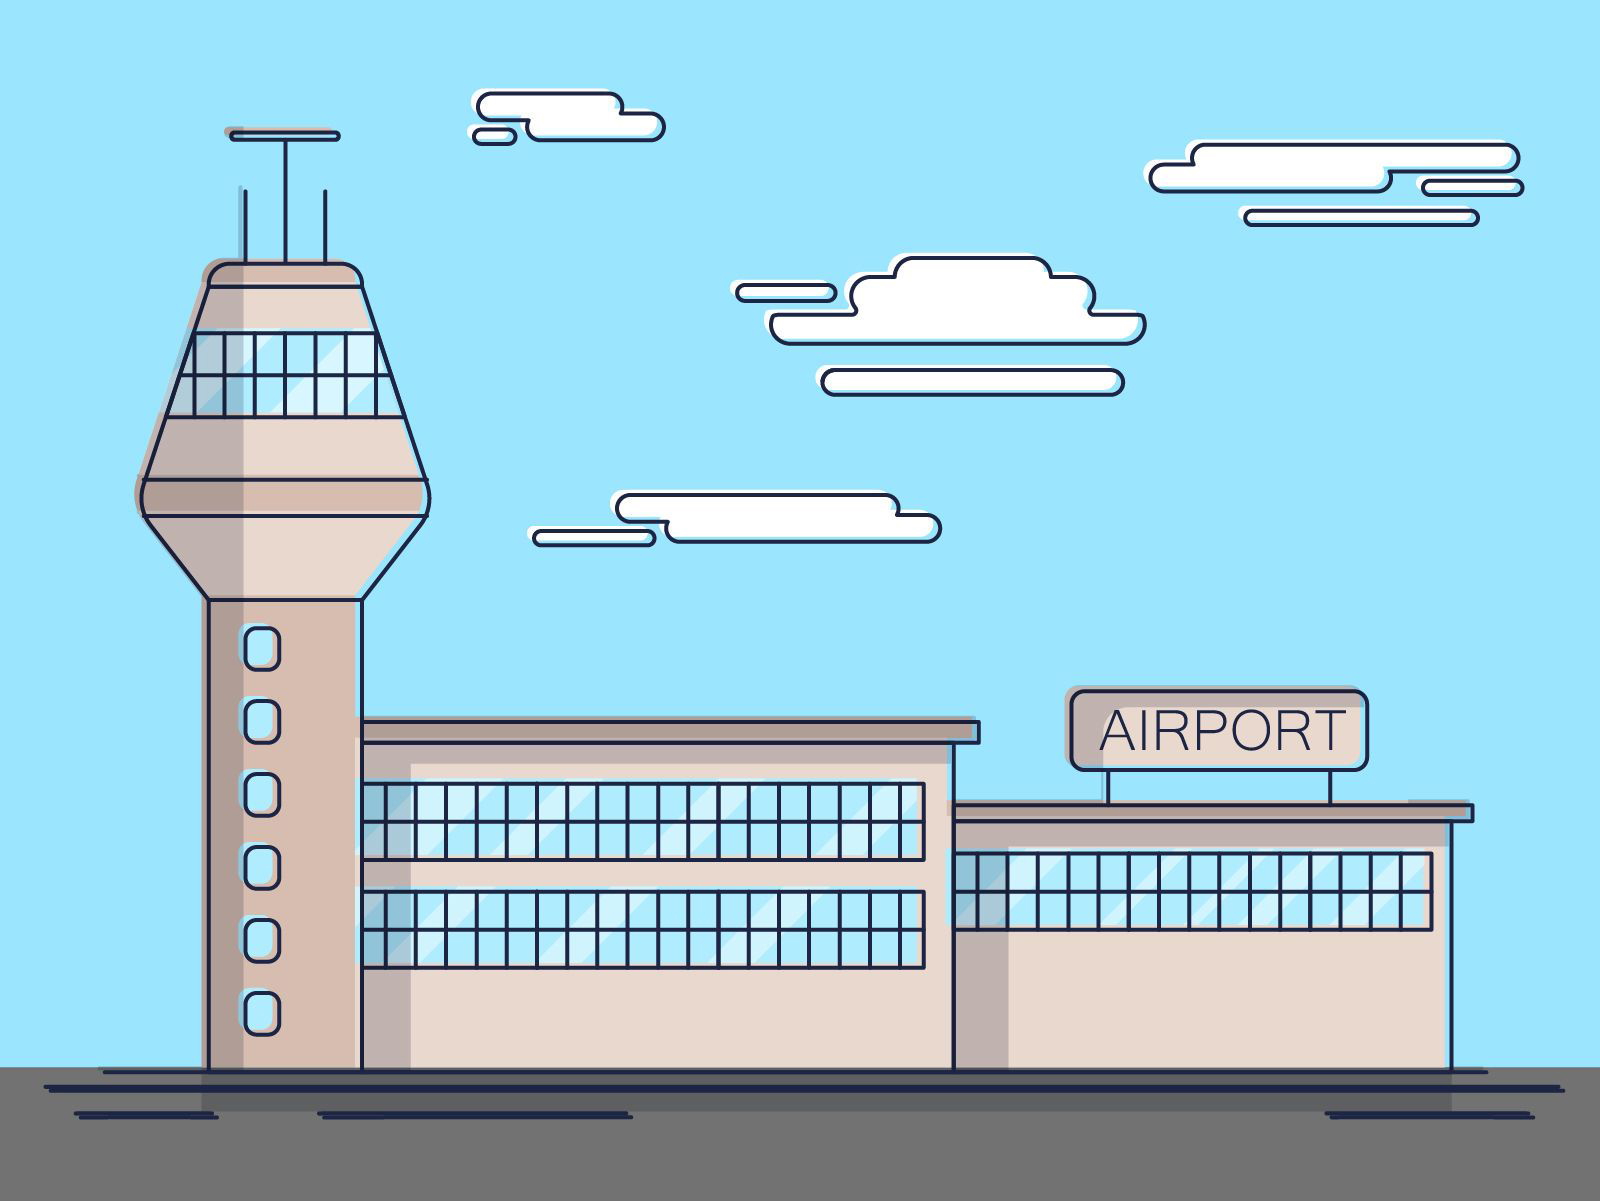 Airport simple illustration